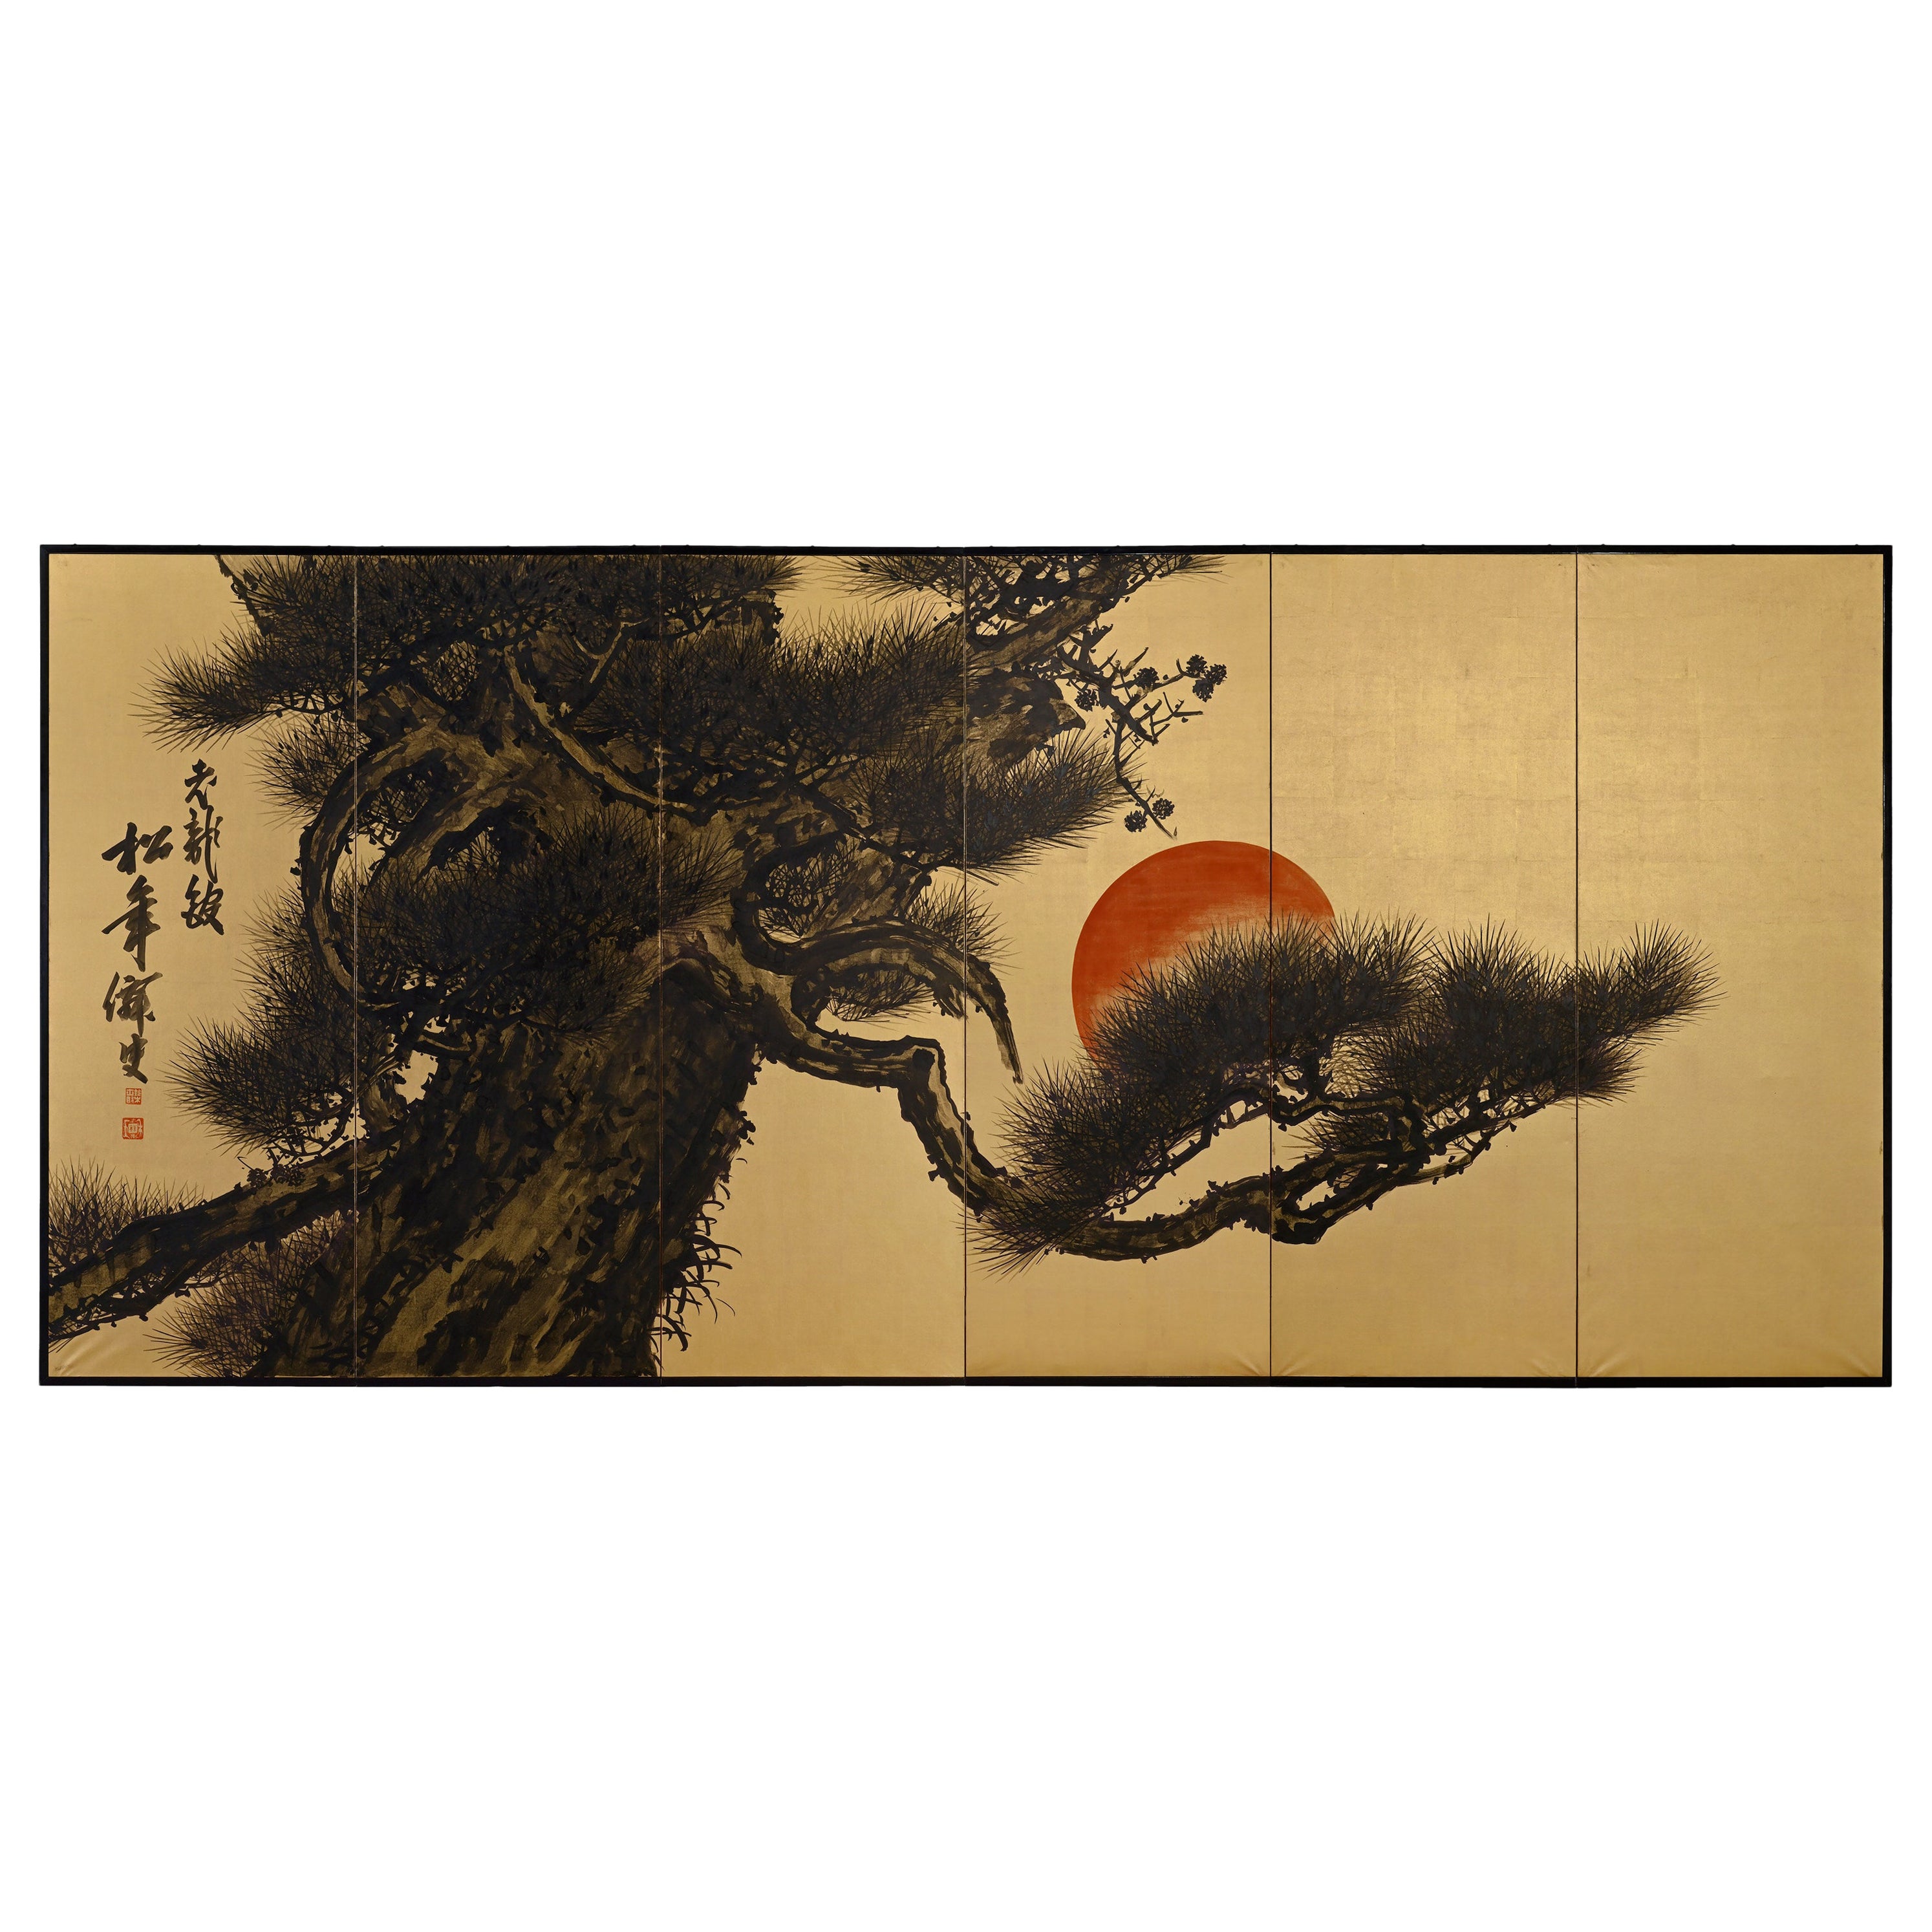 Meiji Period Japanese Screen by Suzuki Shonen, Pine and Rising Sun